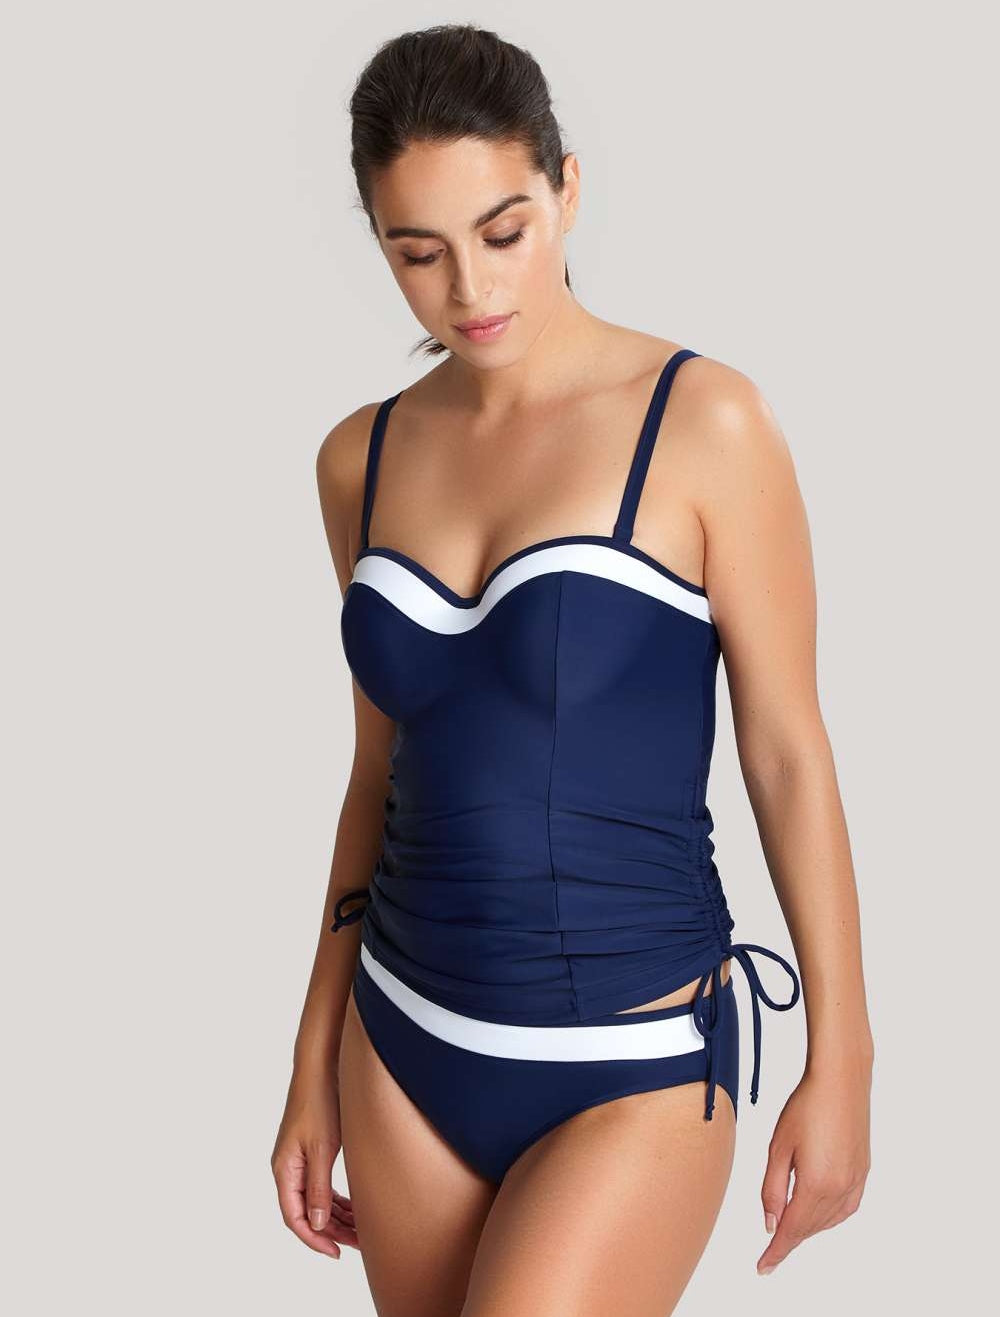 34H Bra Sized Swimsuits  Bikini Tops, Tankinis, One Piece Swimwear